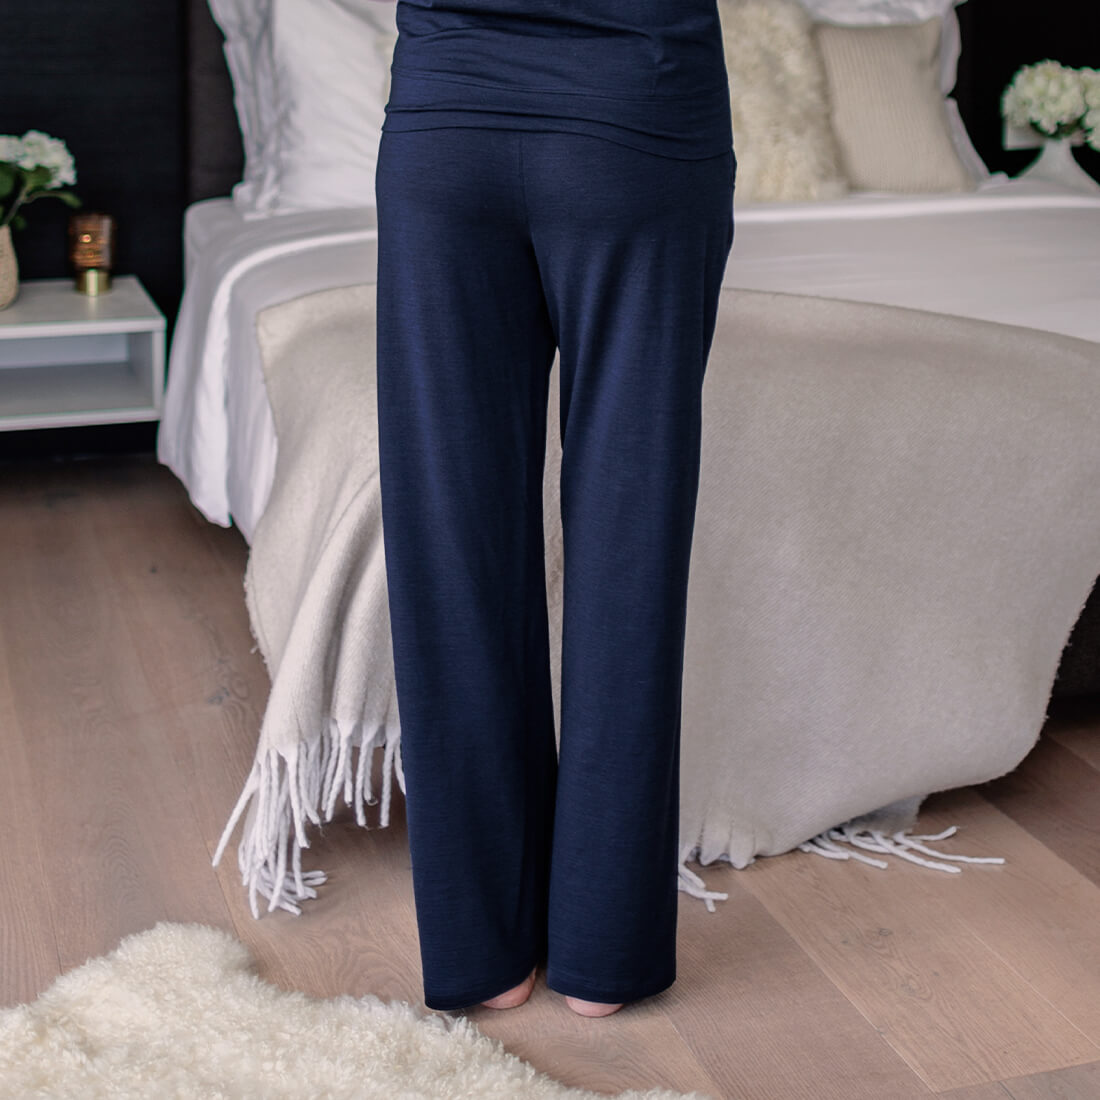 Just Love Plaid Women's Pajama Pants - Soft Sleepwear for Comfortable Nights  (Grey - Sleepy Sheep, Large) - Walmart.com